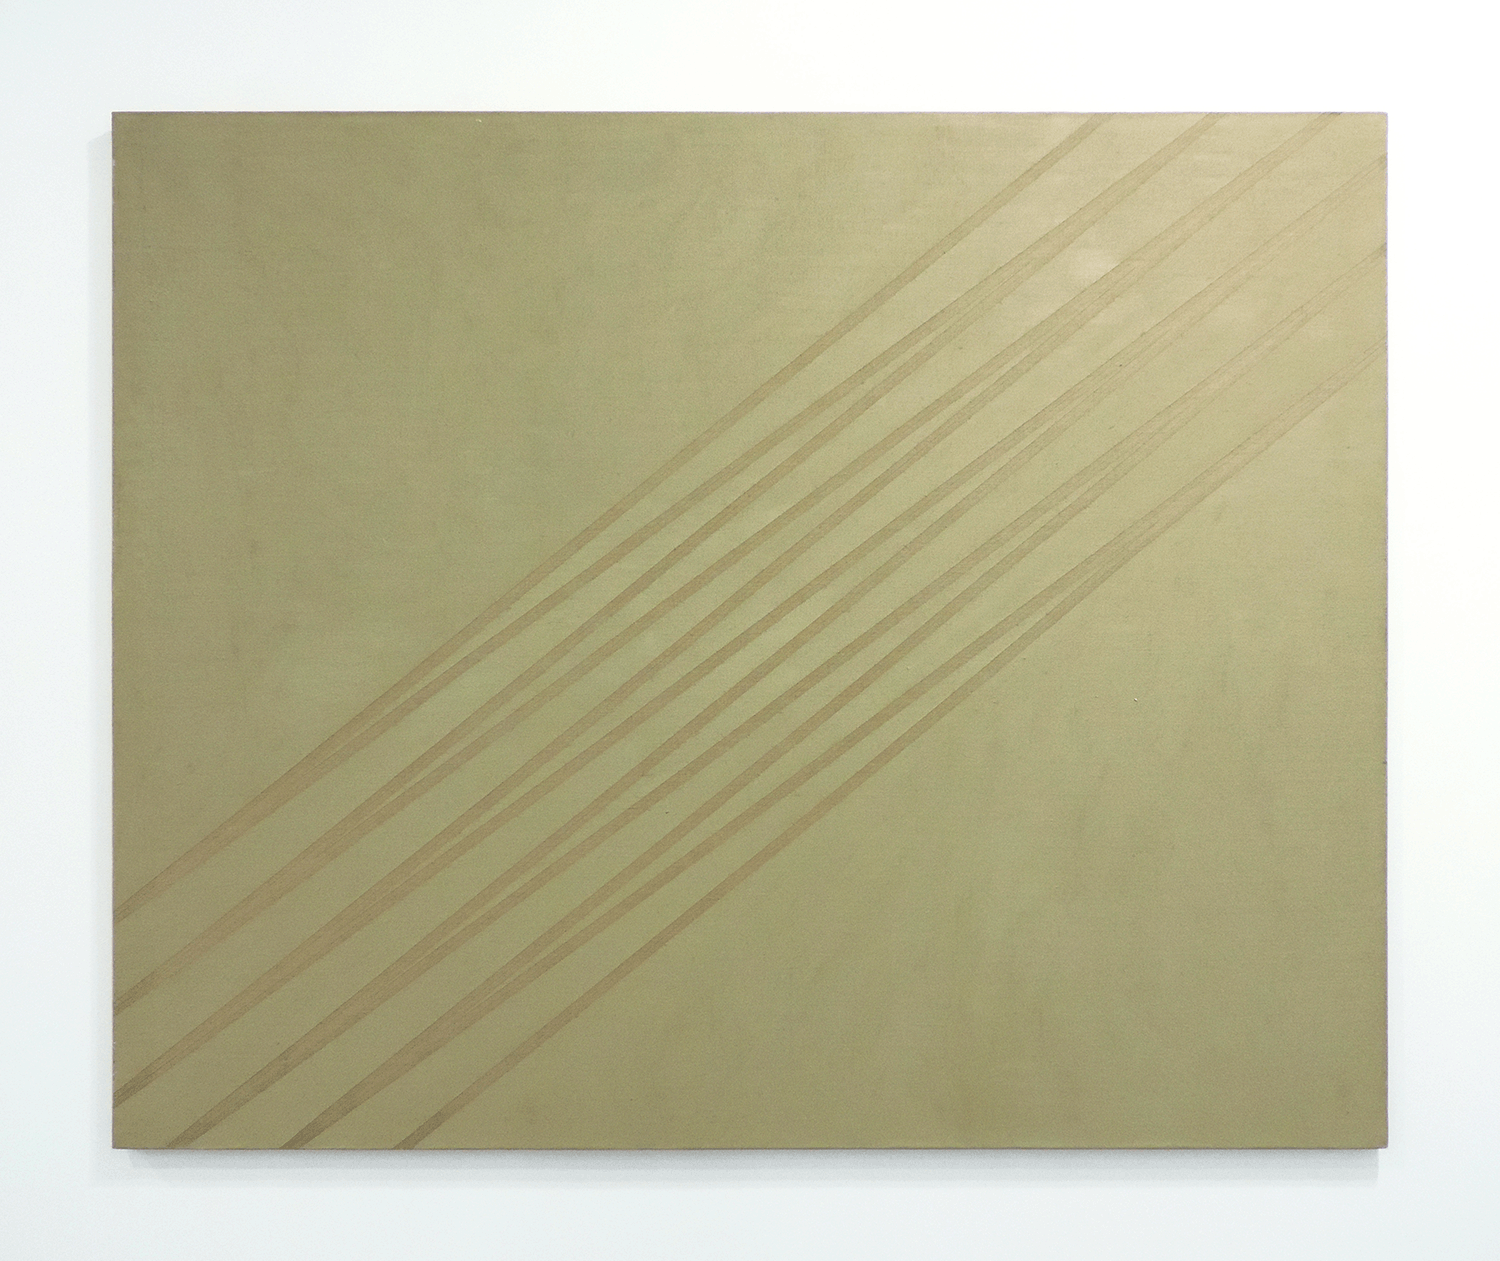 Untitled-ocher No.2-2　/ Oil, pencil on Canvas,162 x 130.5 cm,1973